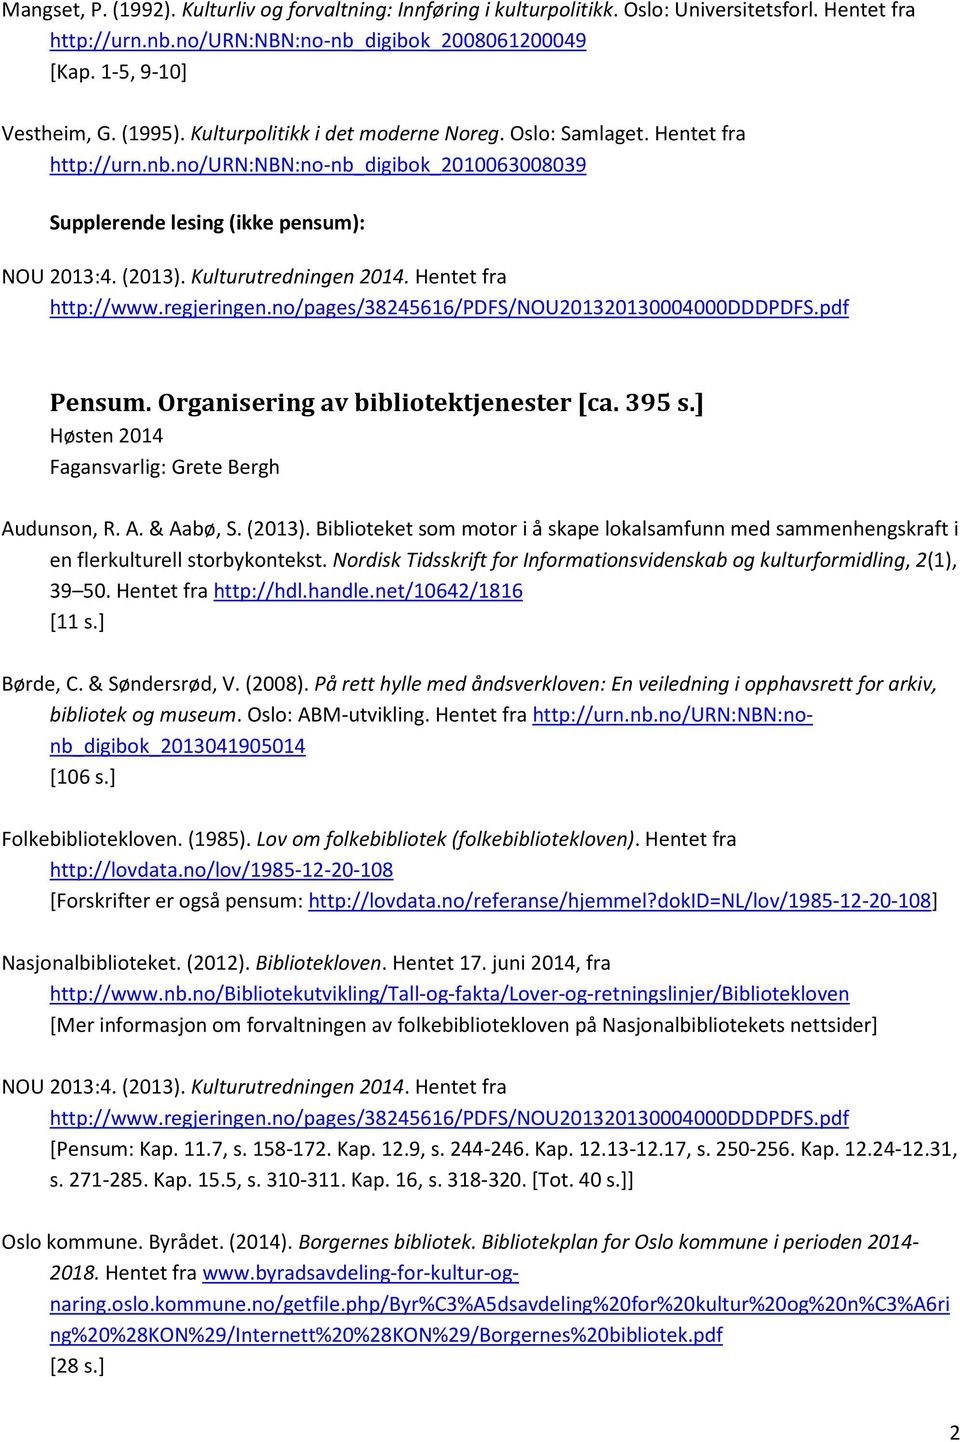 Hentet fra http://www.regjeringen.no/pages/38245616/pdfs/nou201320130004000dddpdfs.pdf Pensum. Organisering av bibliotektjenester [ca. 395 s.] Fagansvarlig: Grete Bergh Audunson, R. A. & Aabø, S.